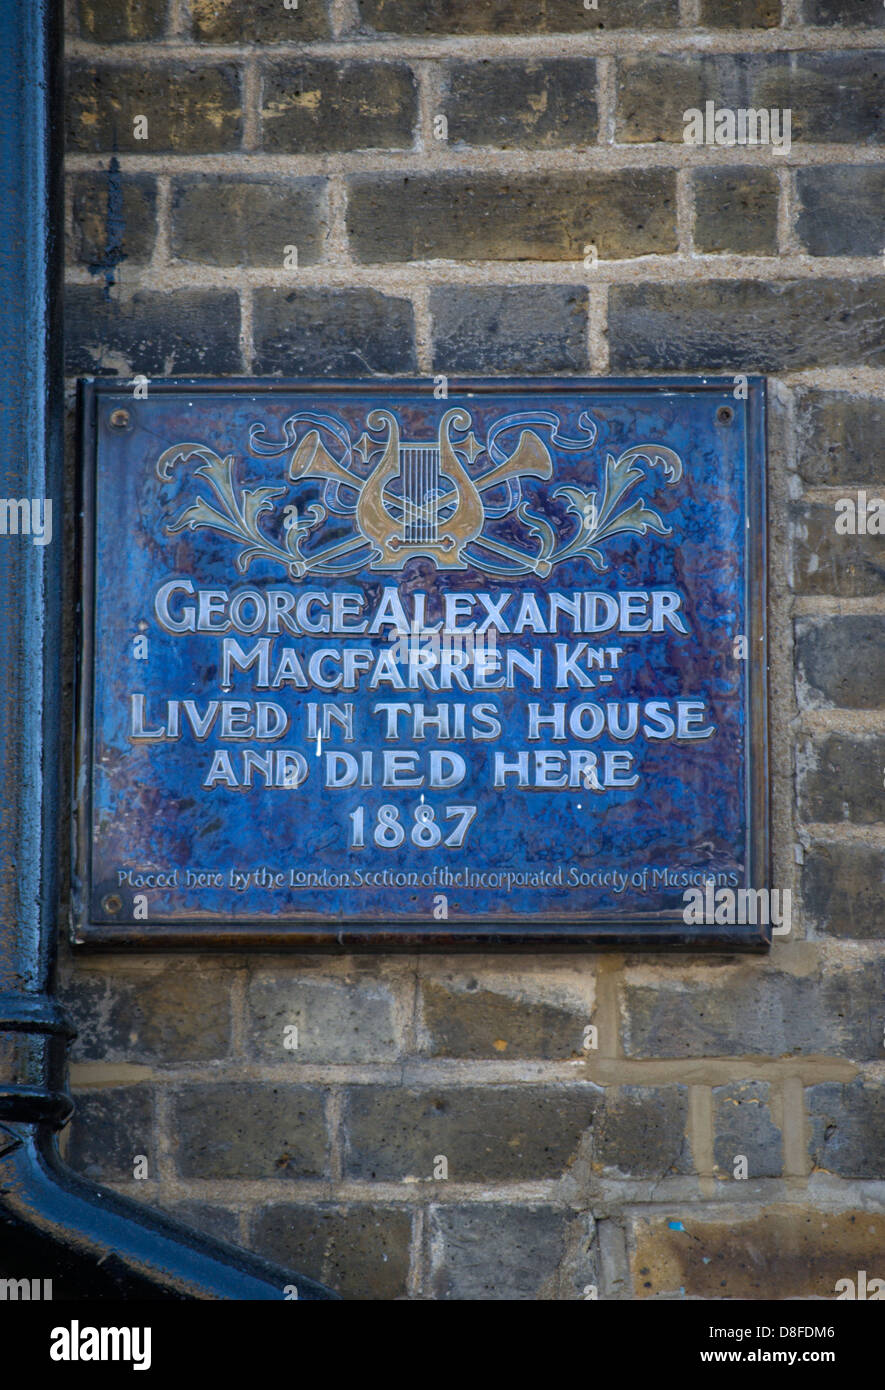 Targa blu segnando una casa del compositore e musicologo george alexander macfarren, St Johns Wood, Londra, Inghilterra Foto Stock